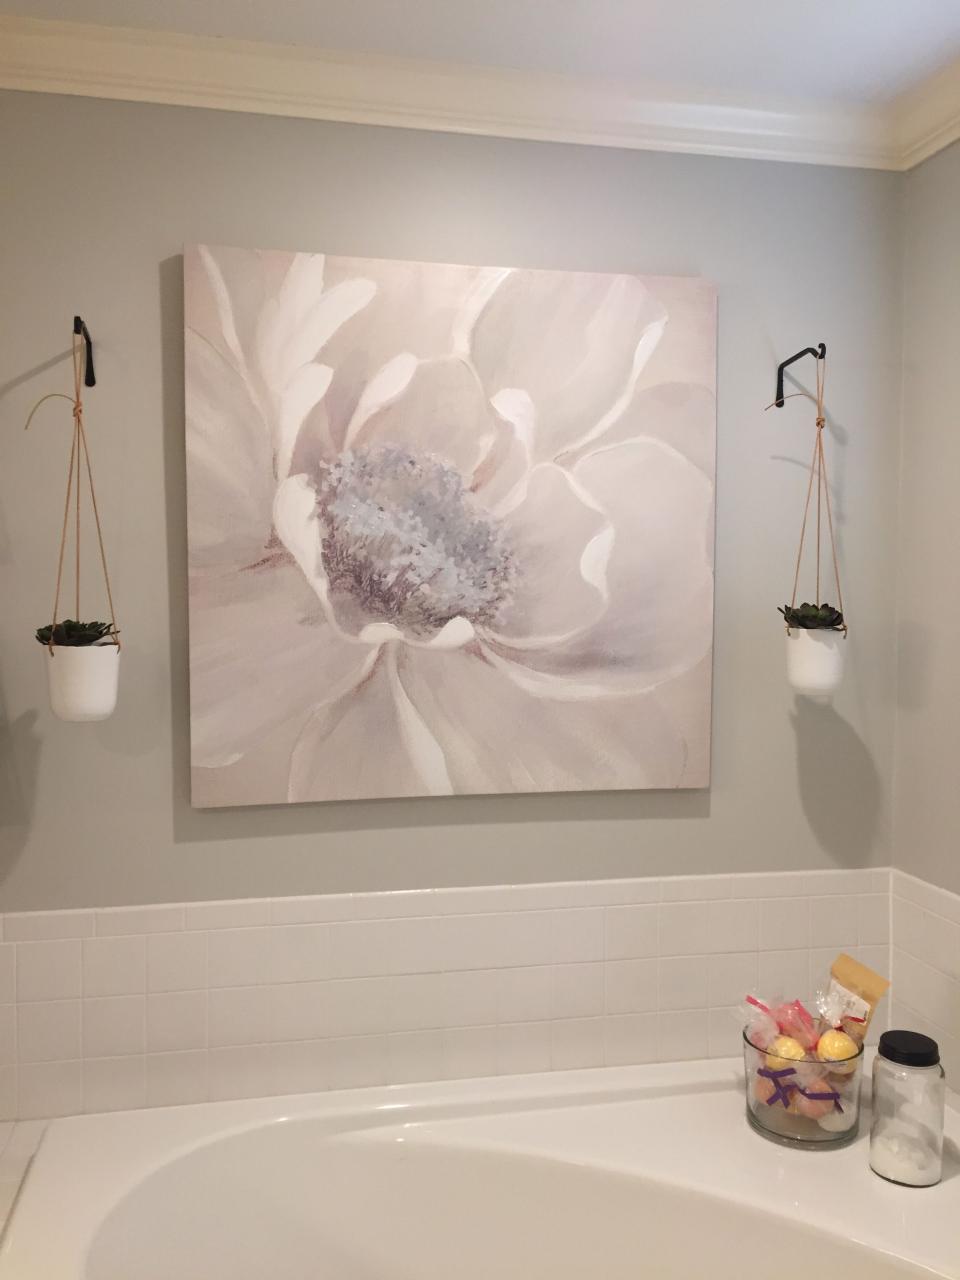 Master bath design using a little modern wall art piece and hanging